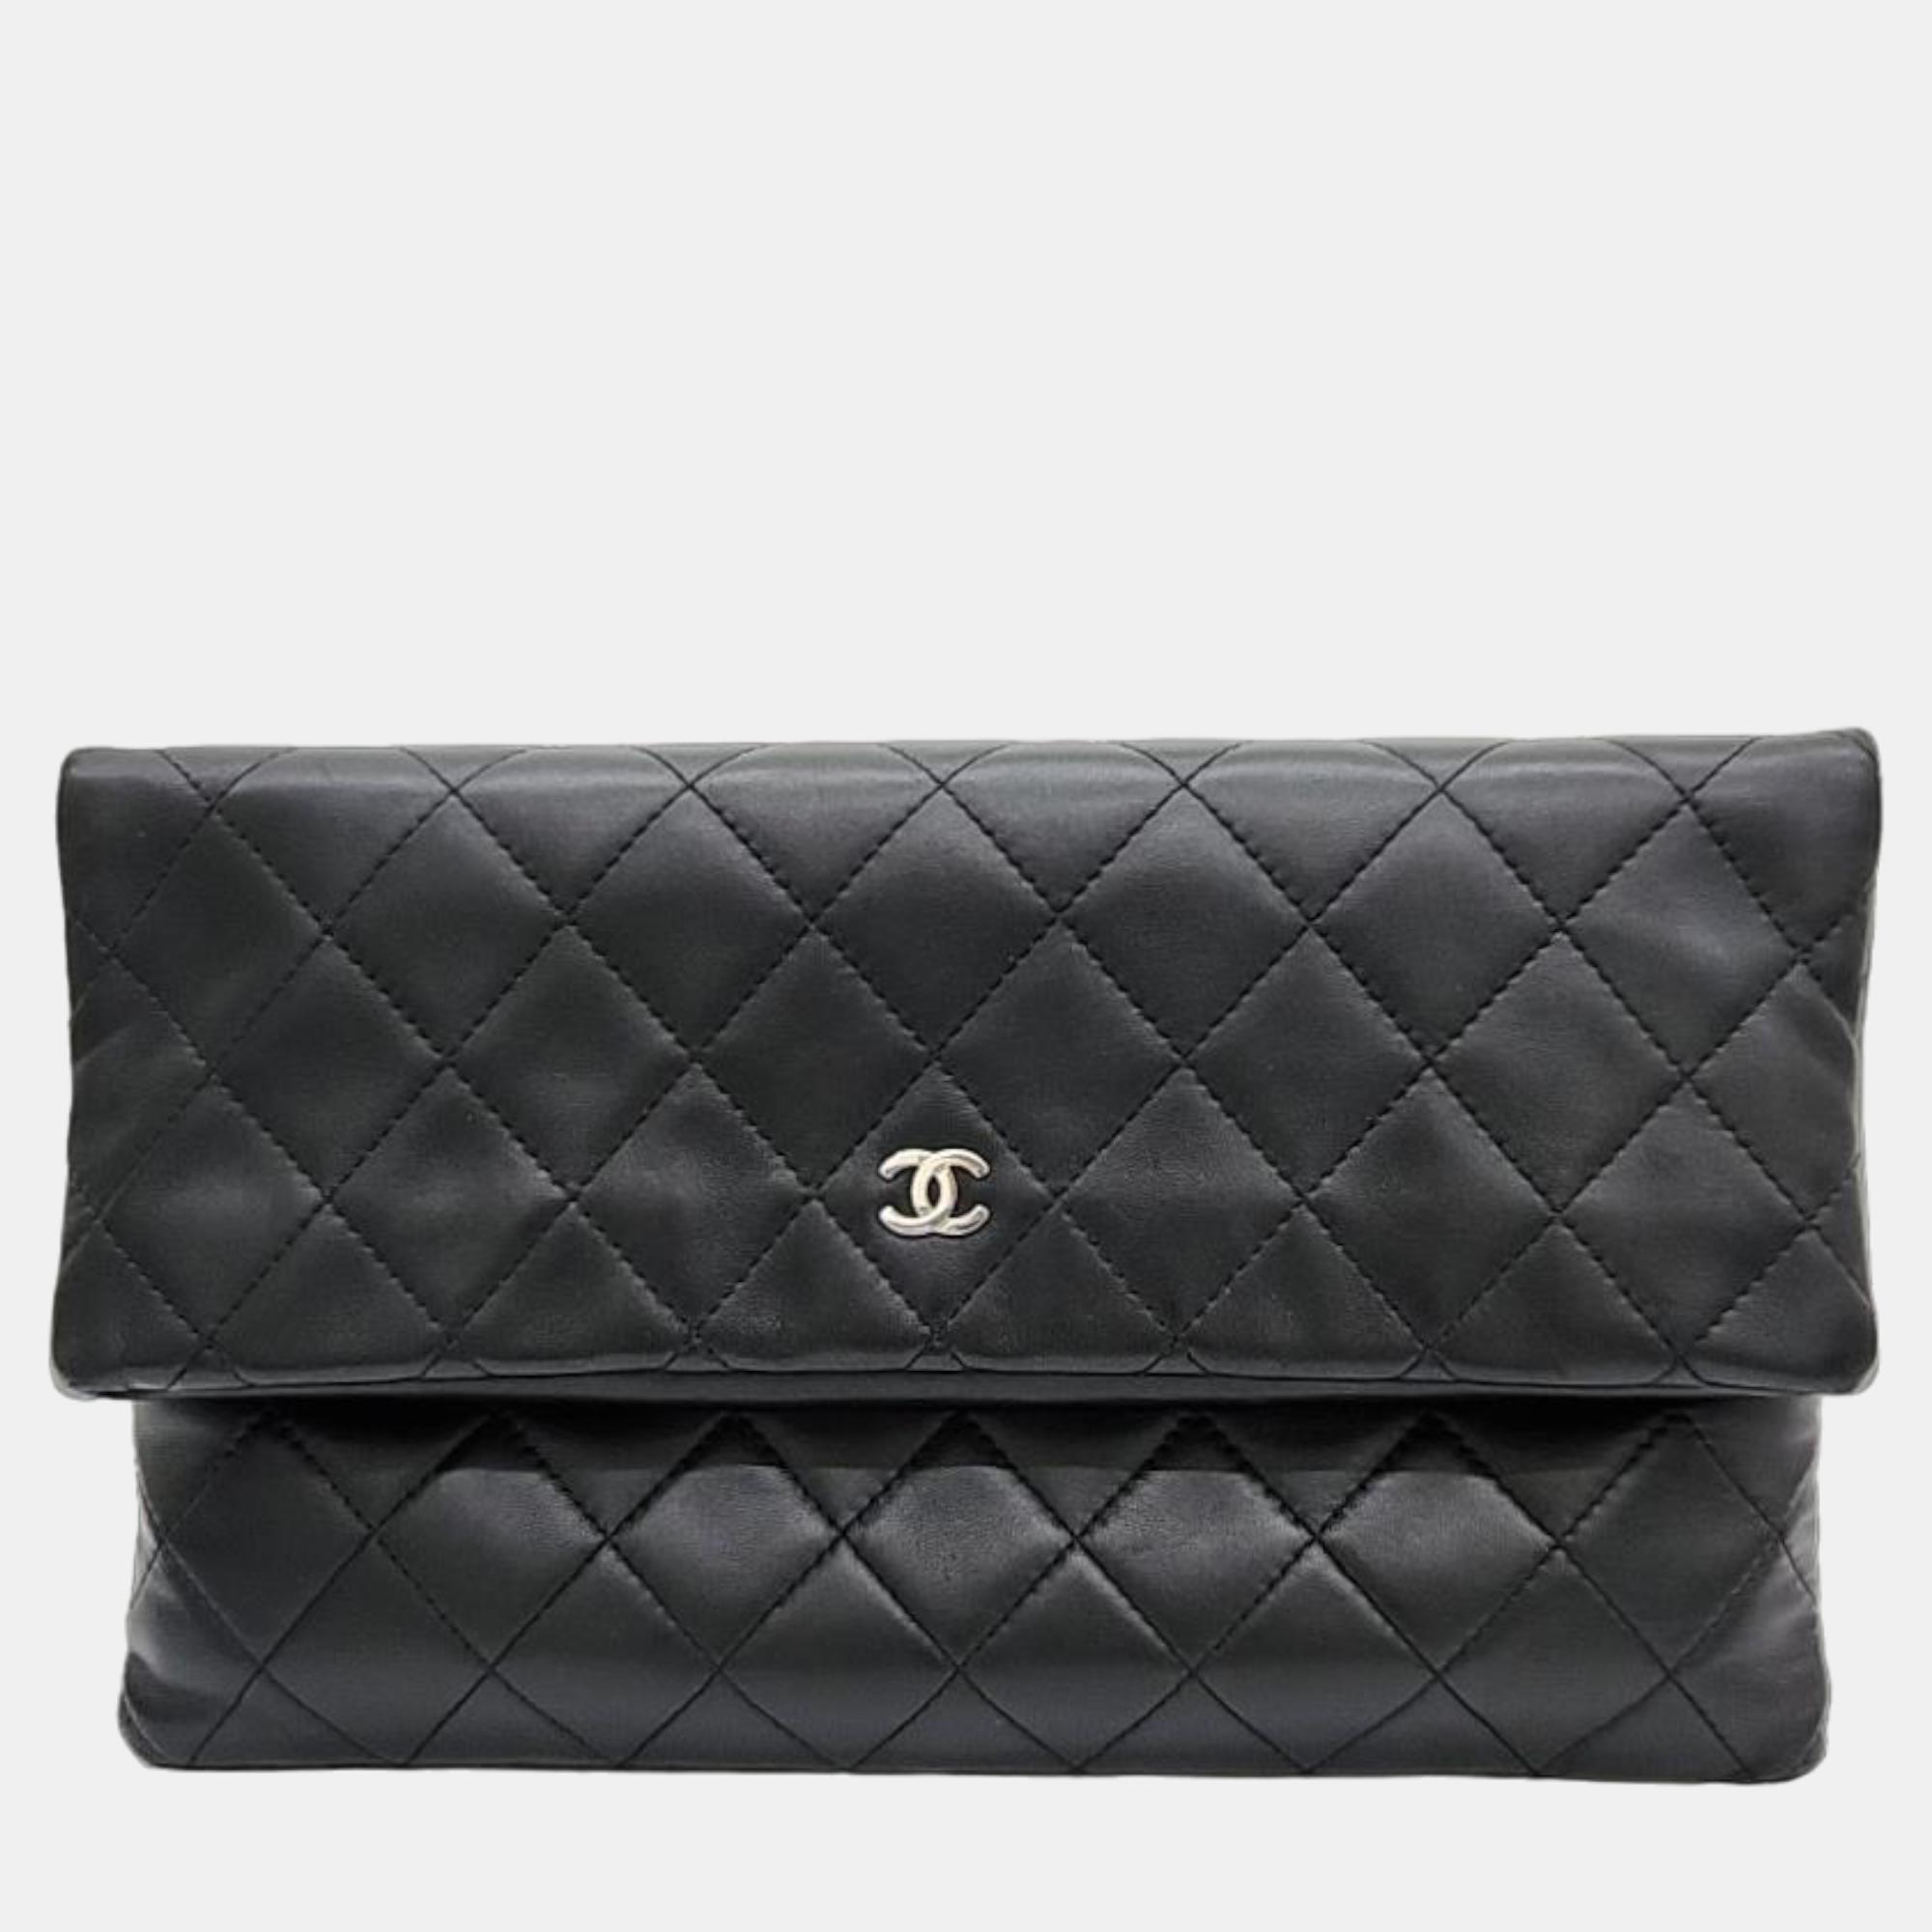 Chanel Black Leather CC Clutch